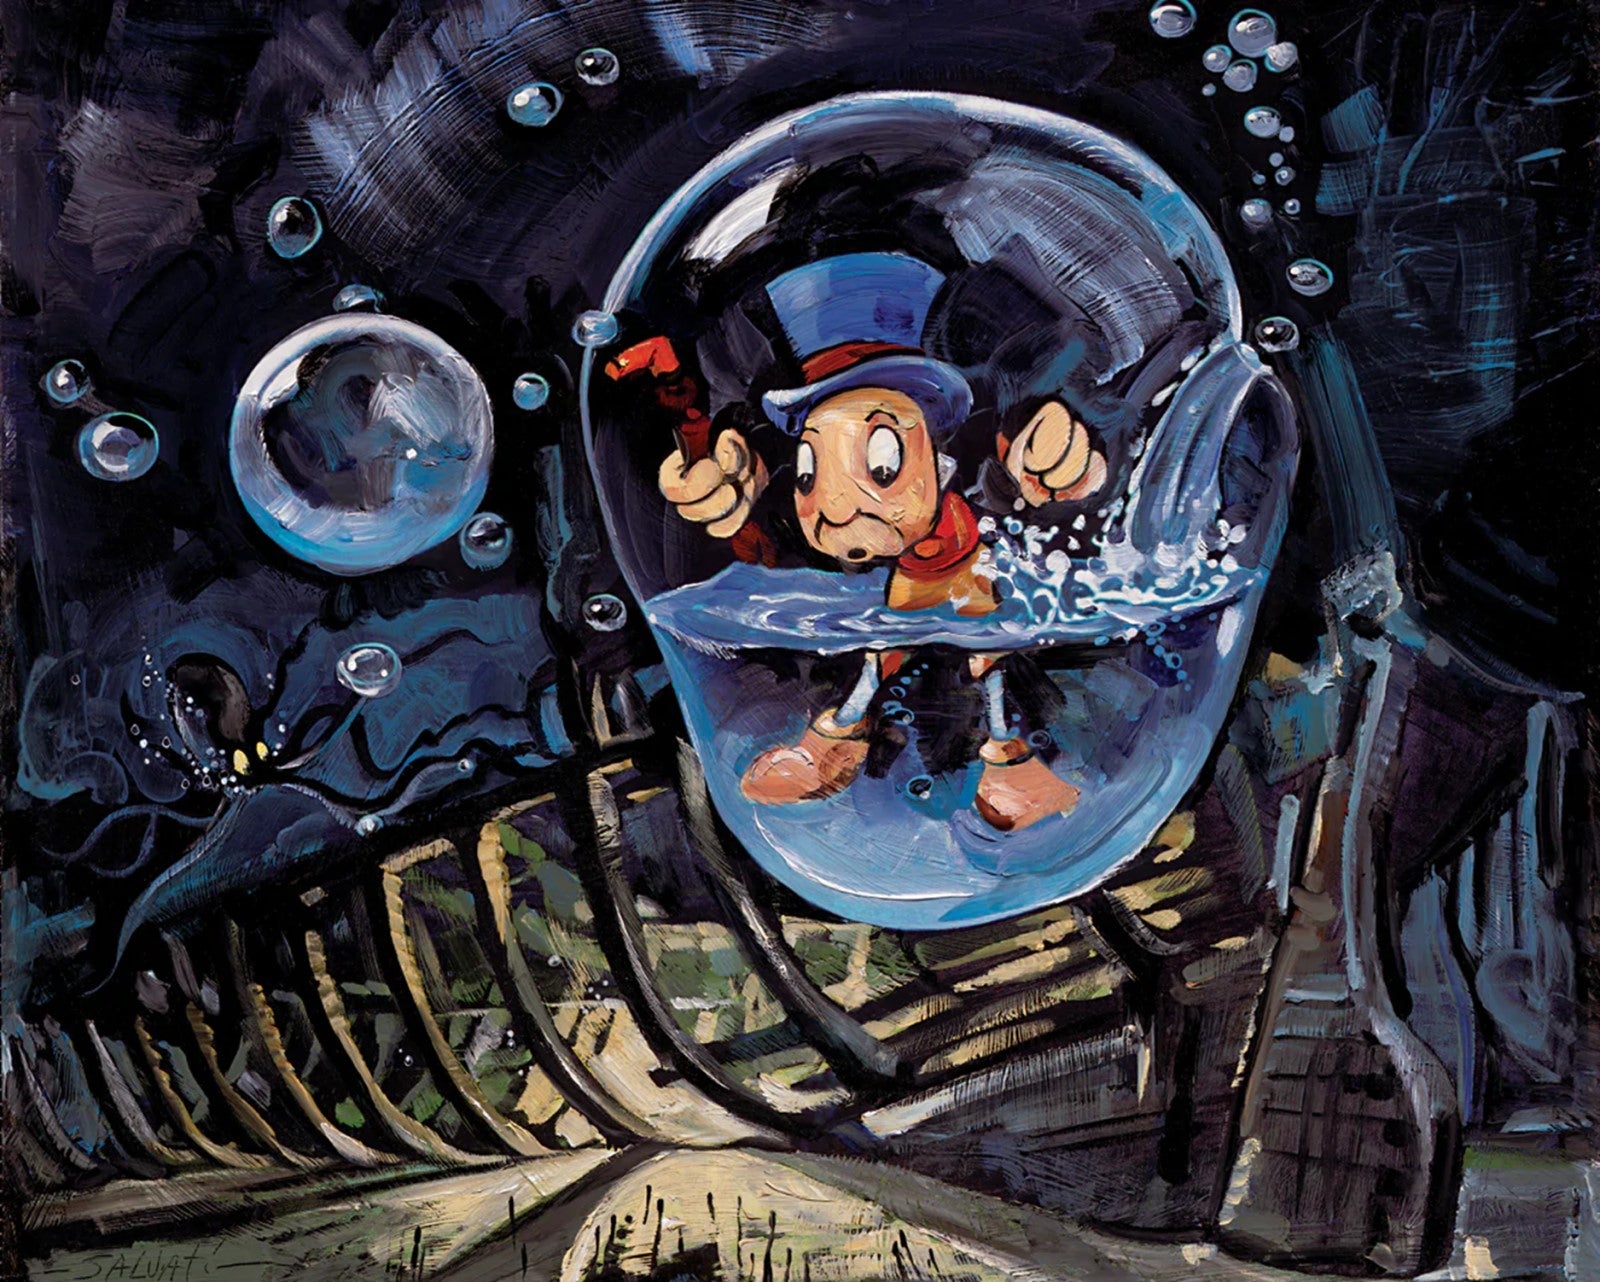 Waterlogged by Jim Salvati inspired by Pinocchio